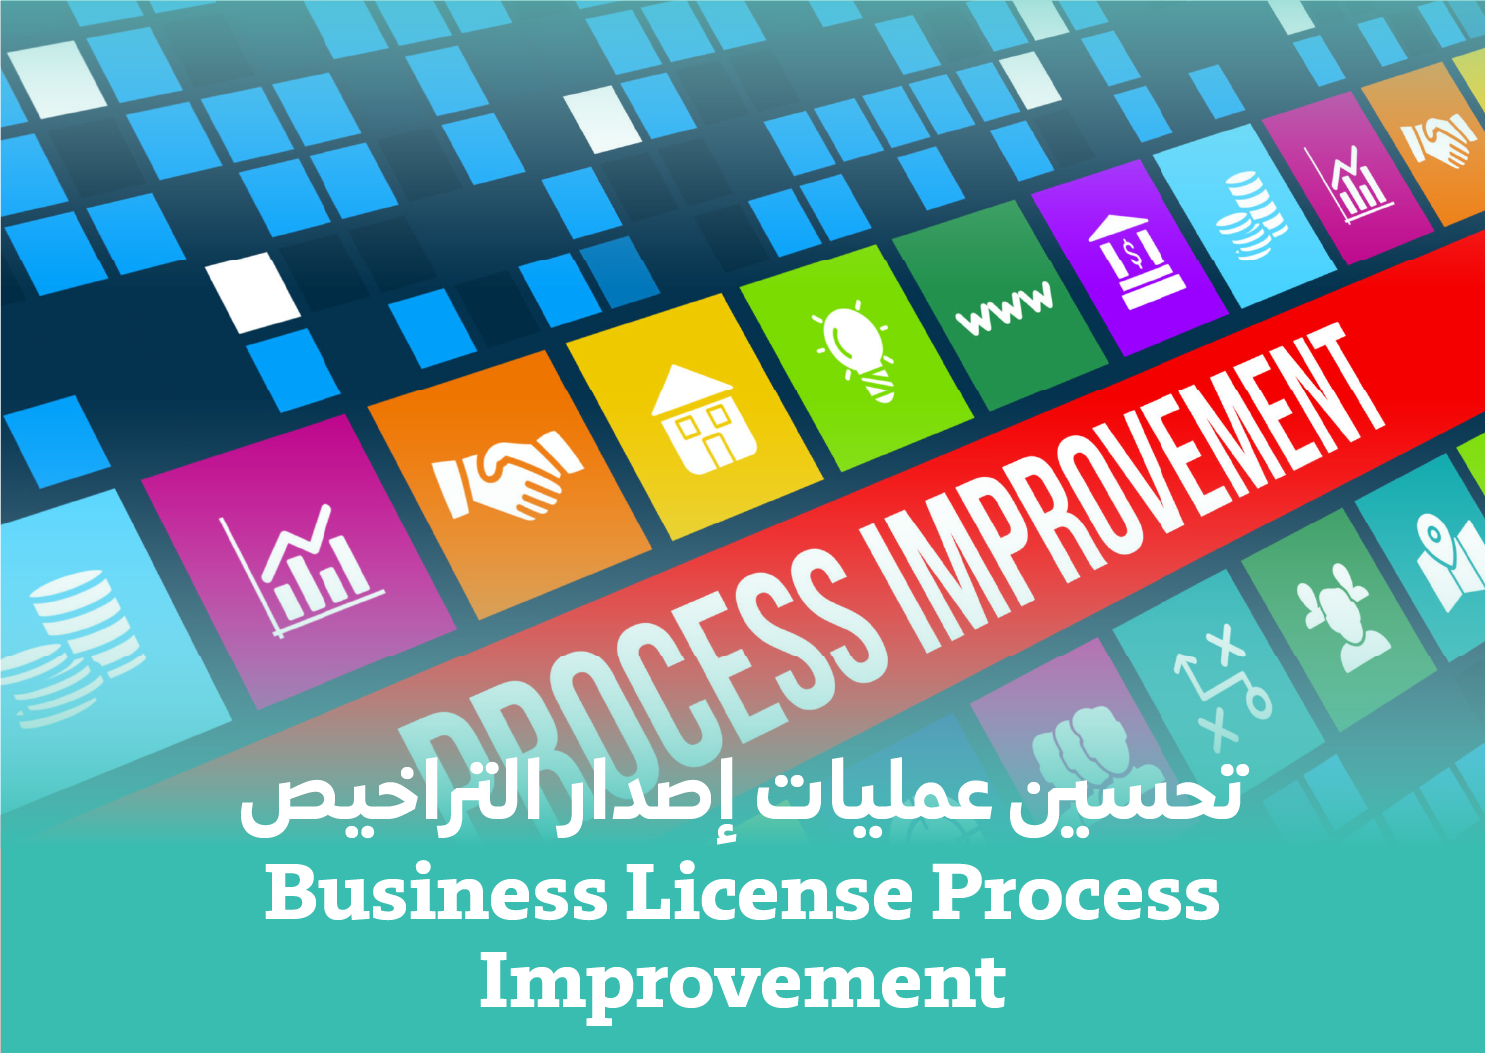 Business License Process Improvement